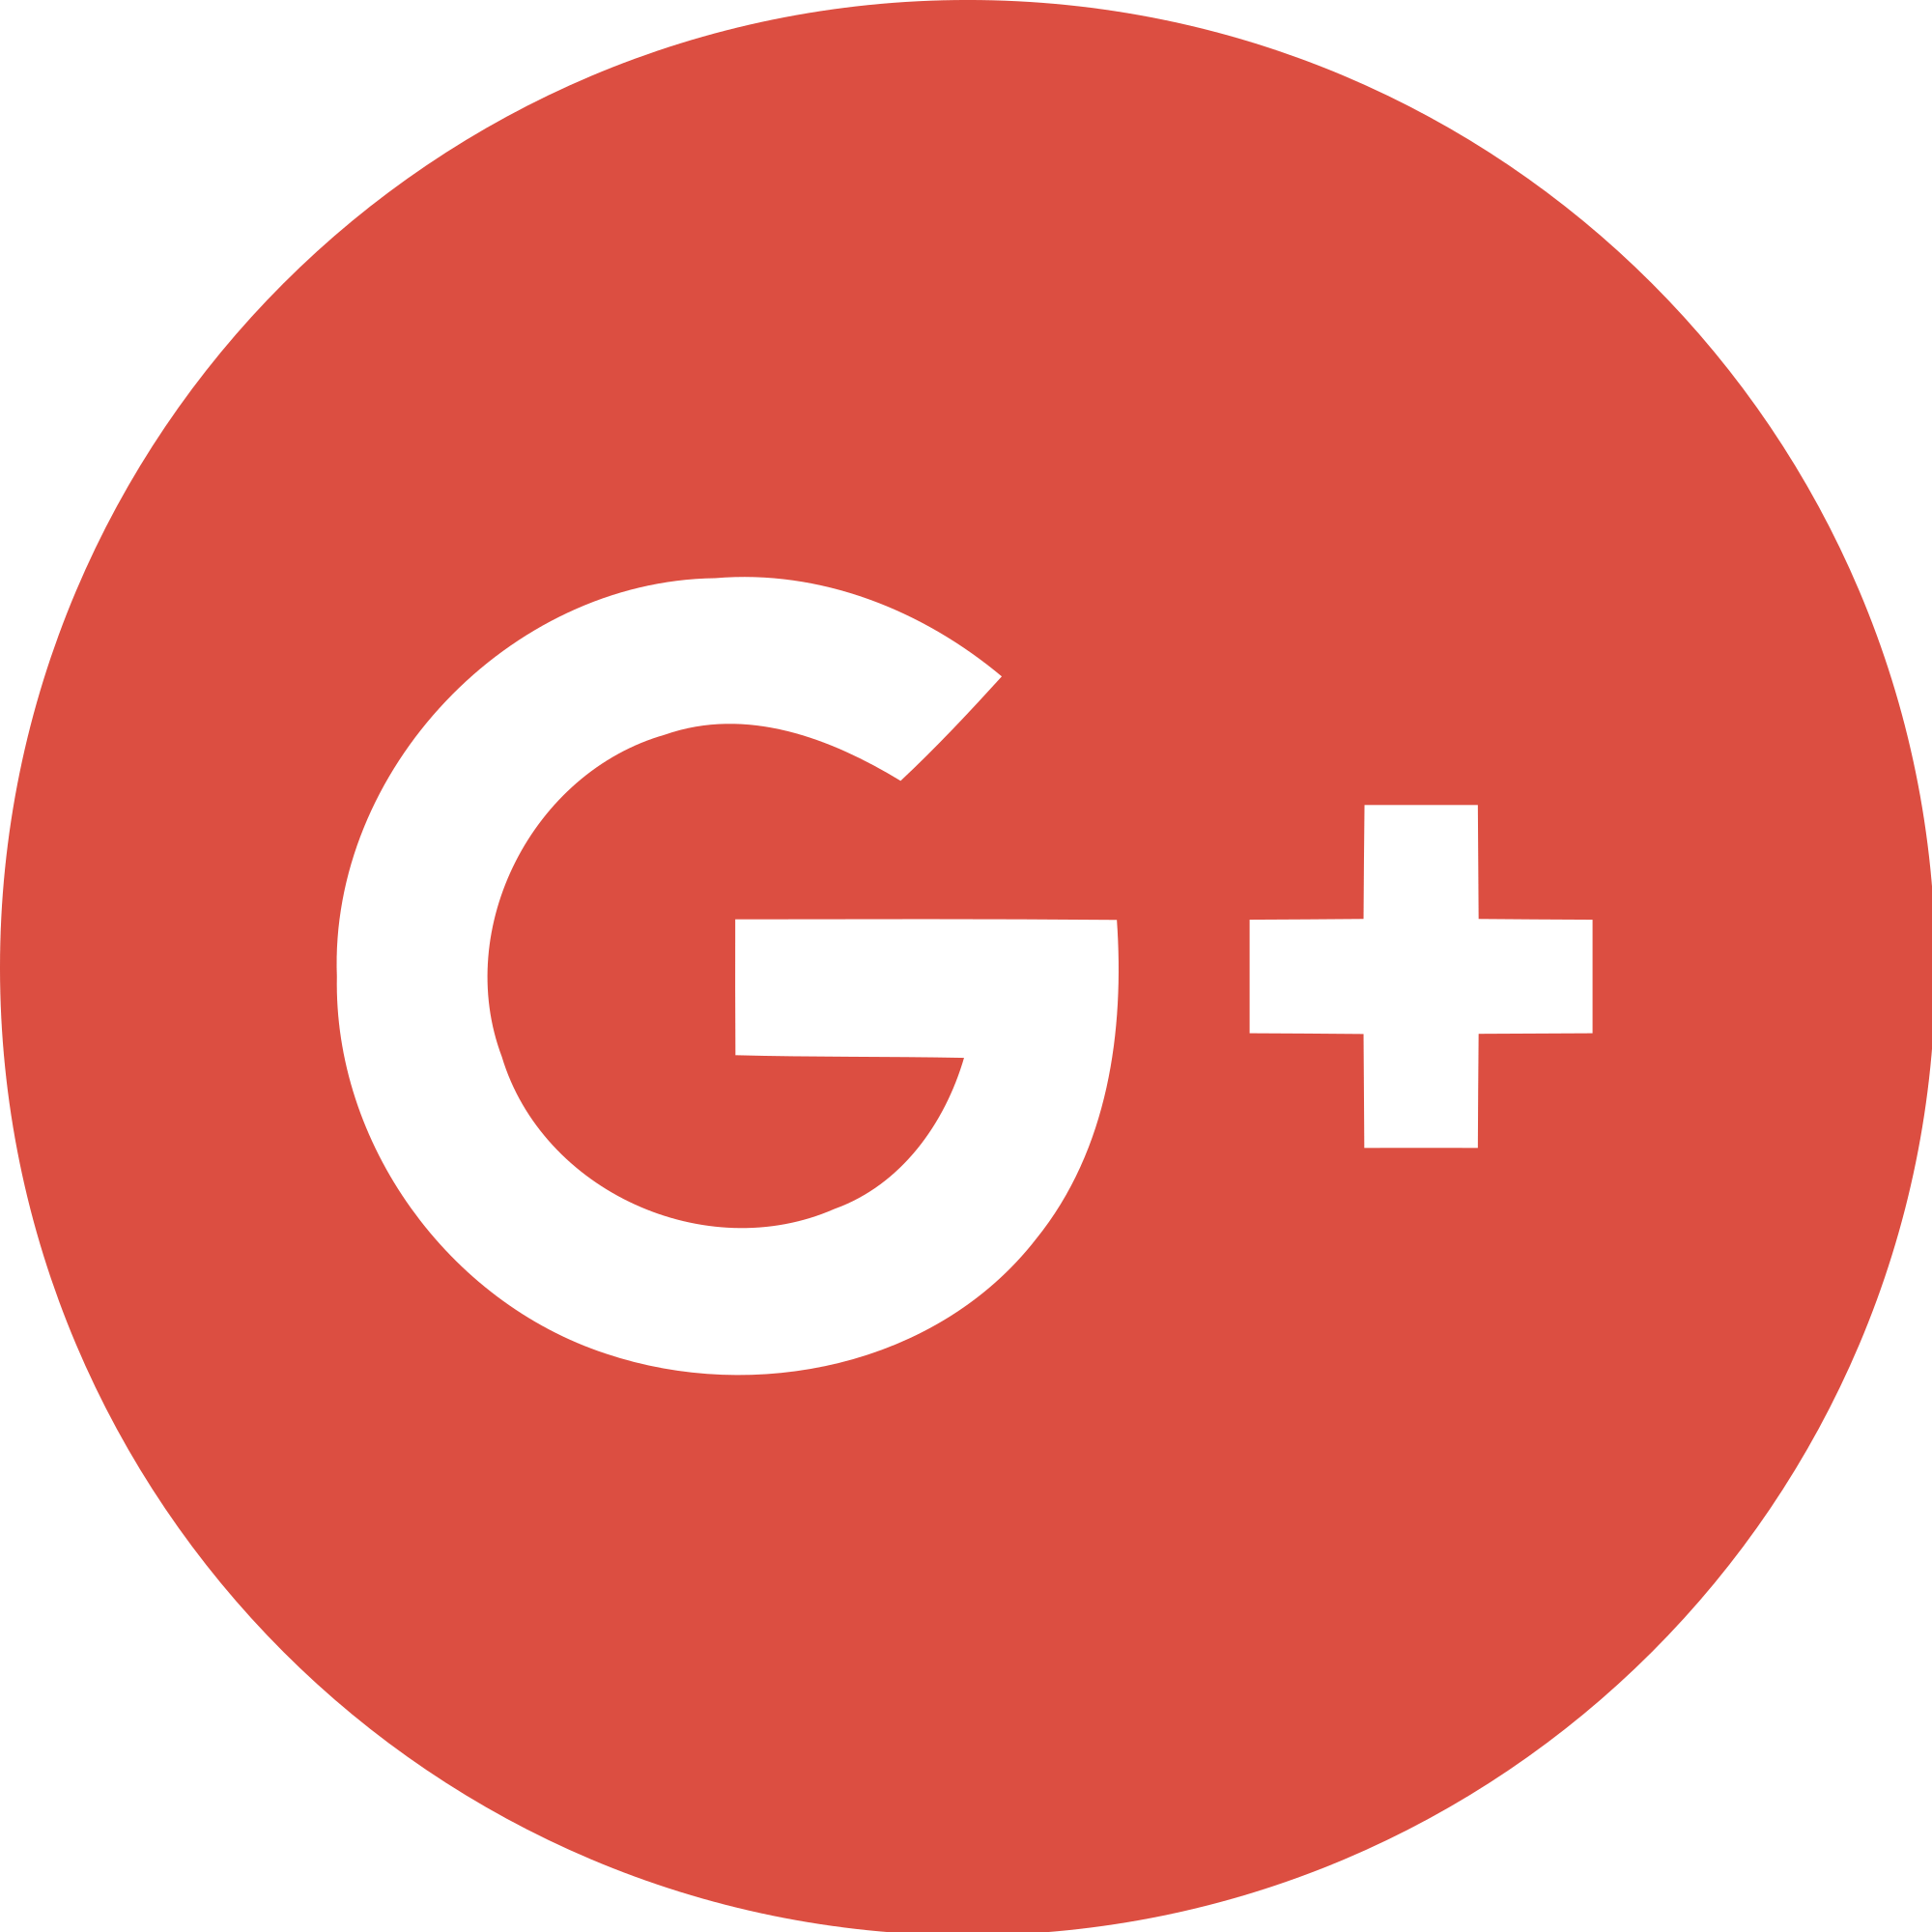 New Google Plus Logo - File:Google Plus logo 2015.svg - Wikimedia Commons